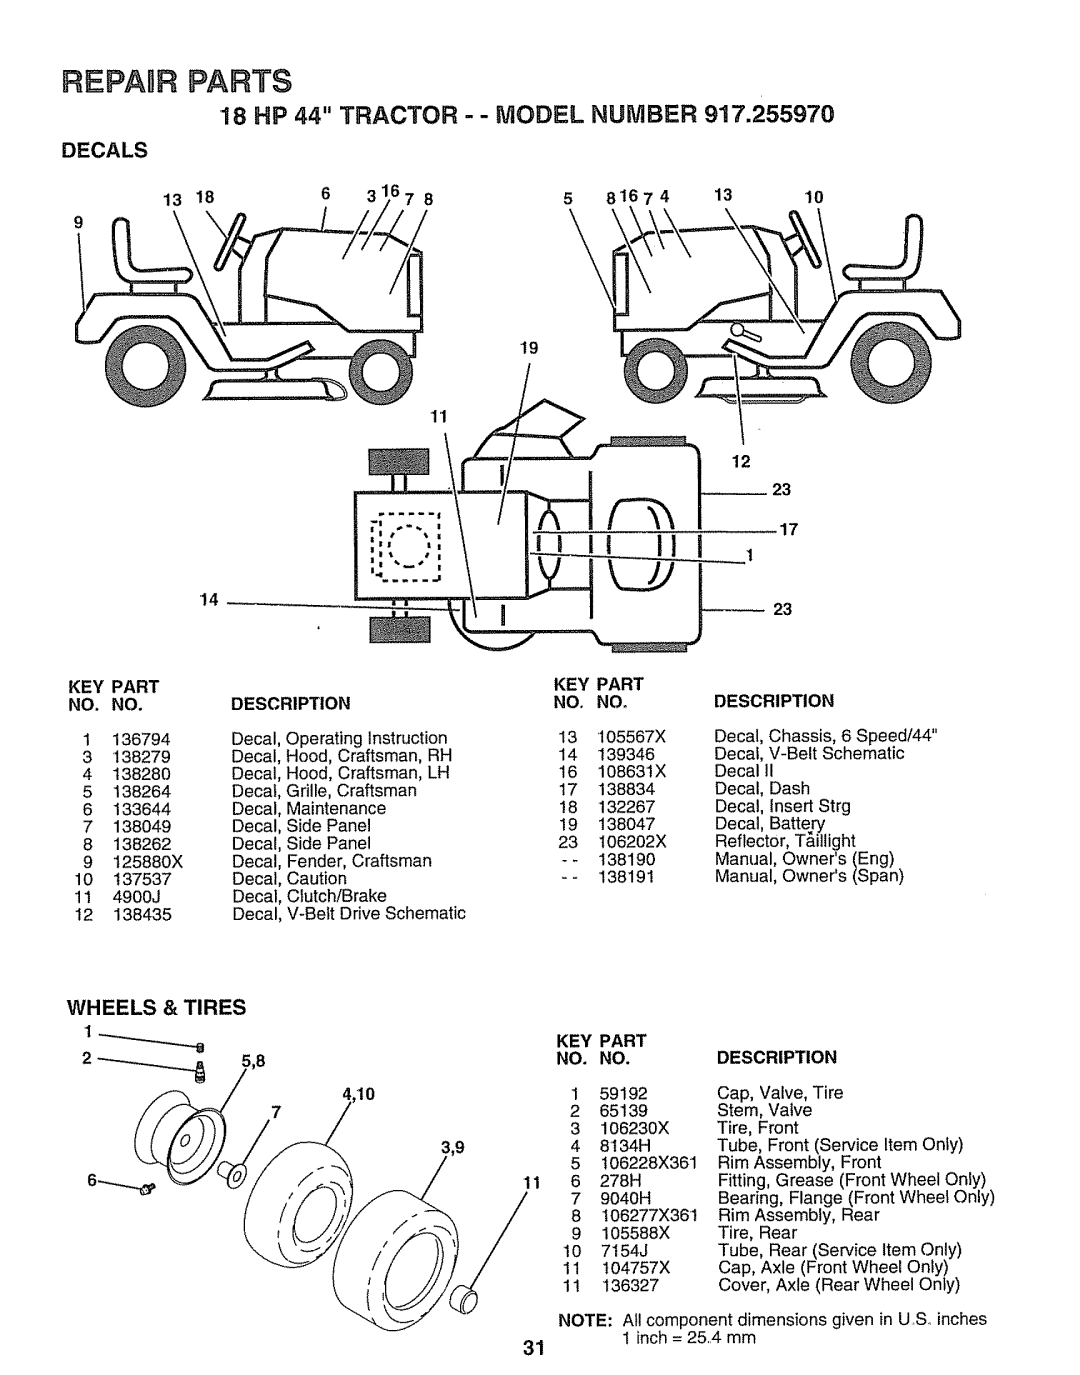 Sears 917.25597 Repair Parts, 18 HP 44 TRACTOR -- MODEL NUMBER, Decals, Wheels & Tires, 8167, Description, Key Part 